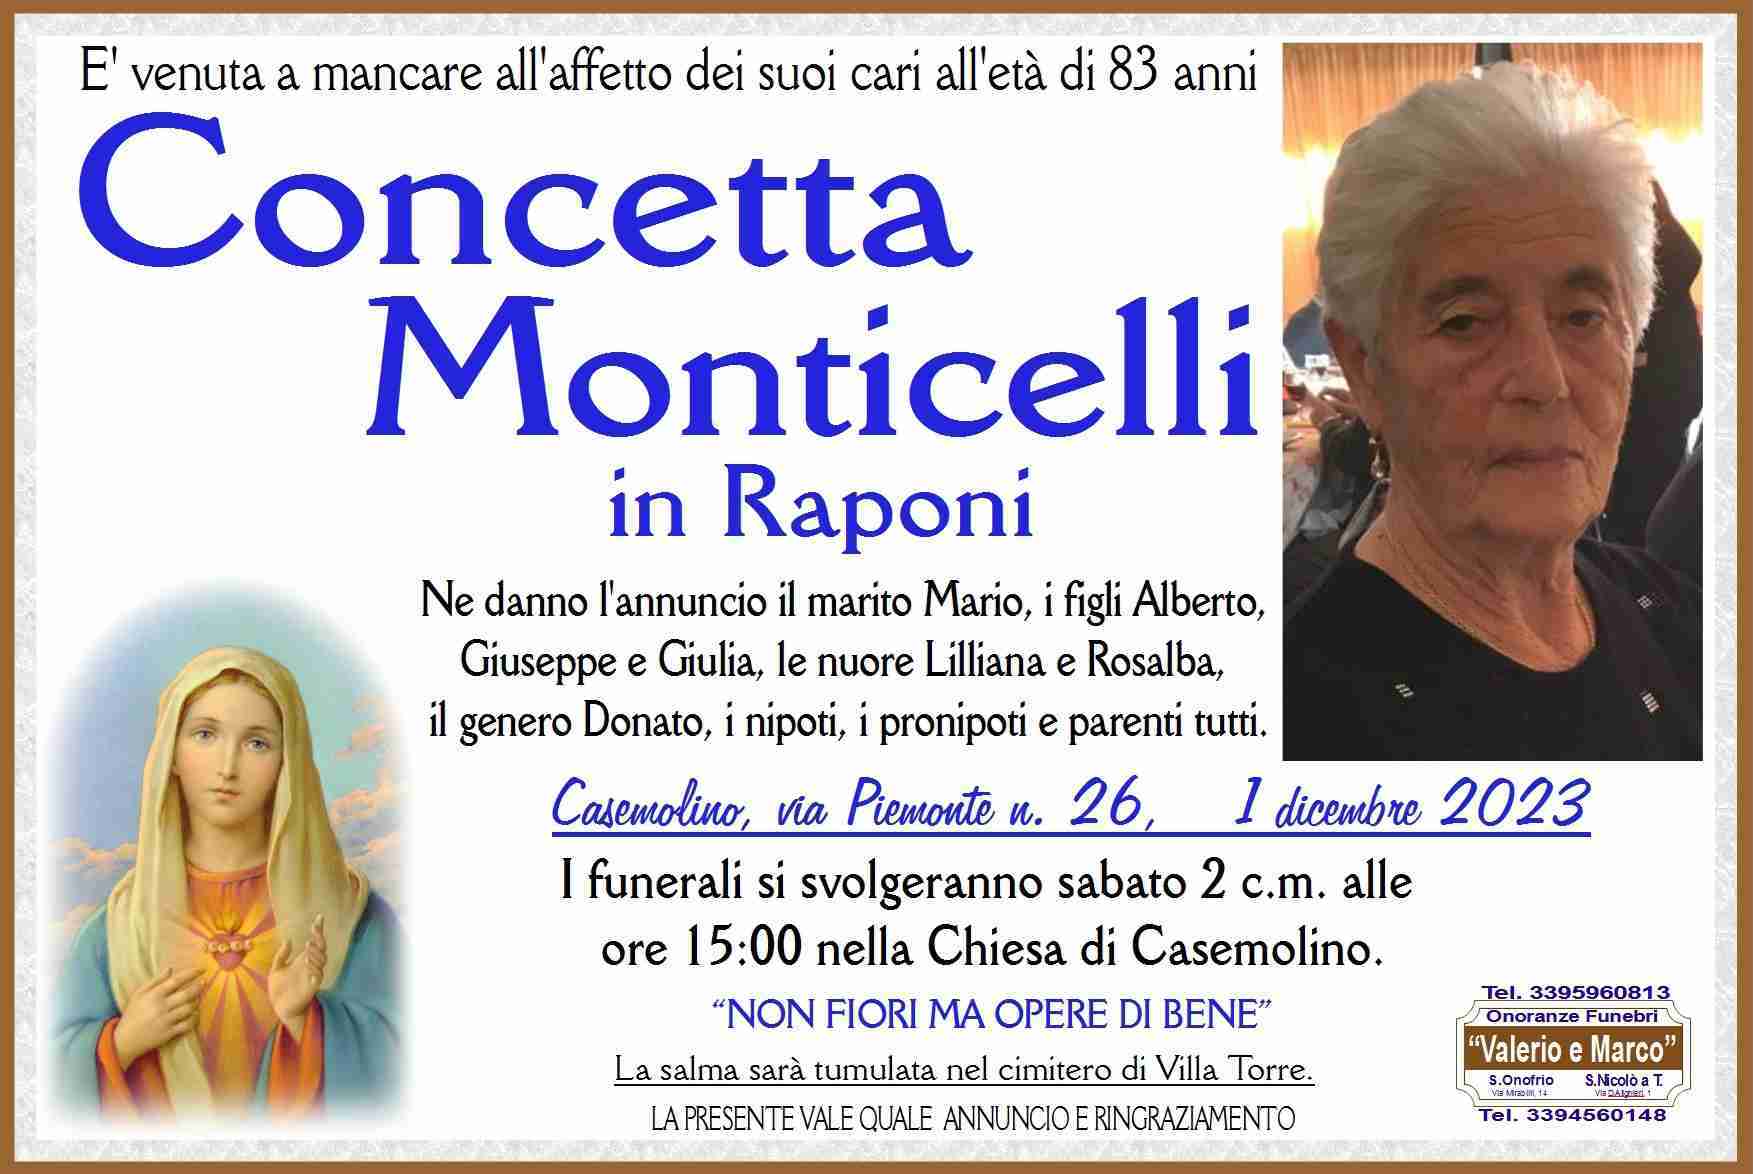 Concetta Monticelli